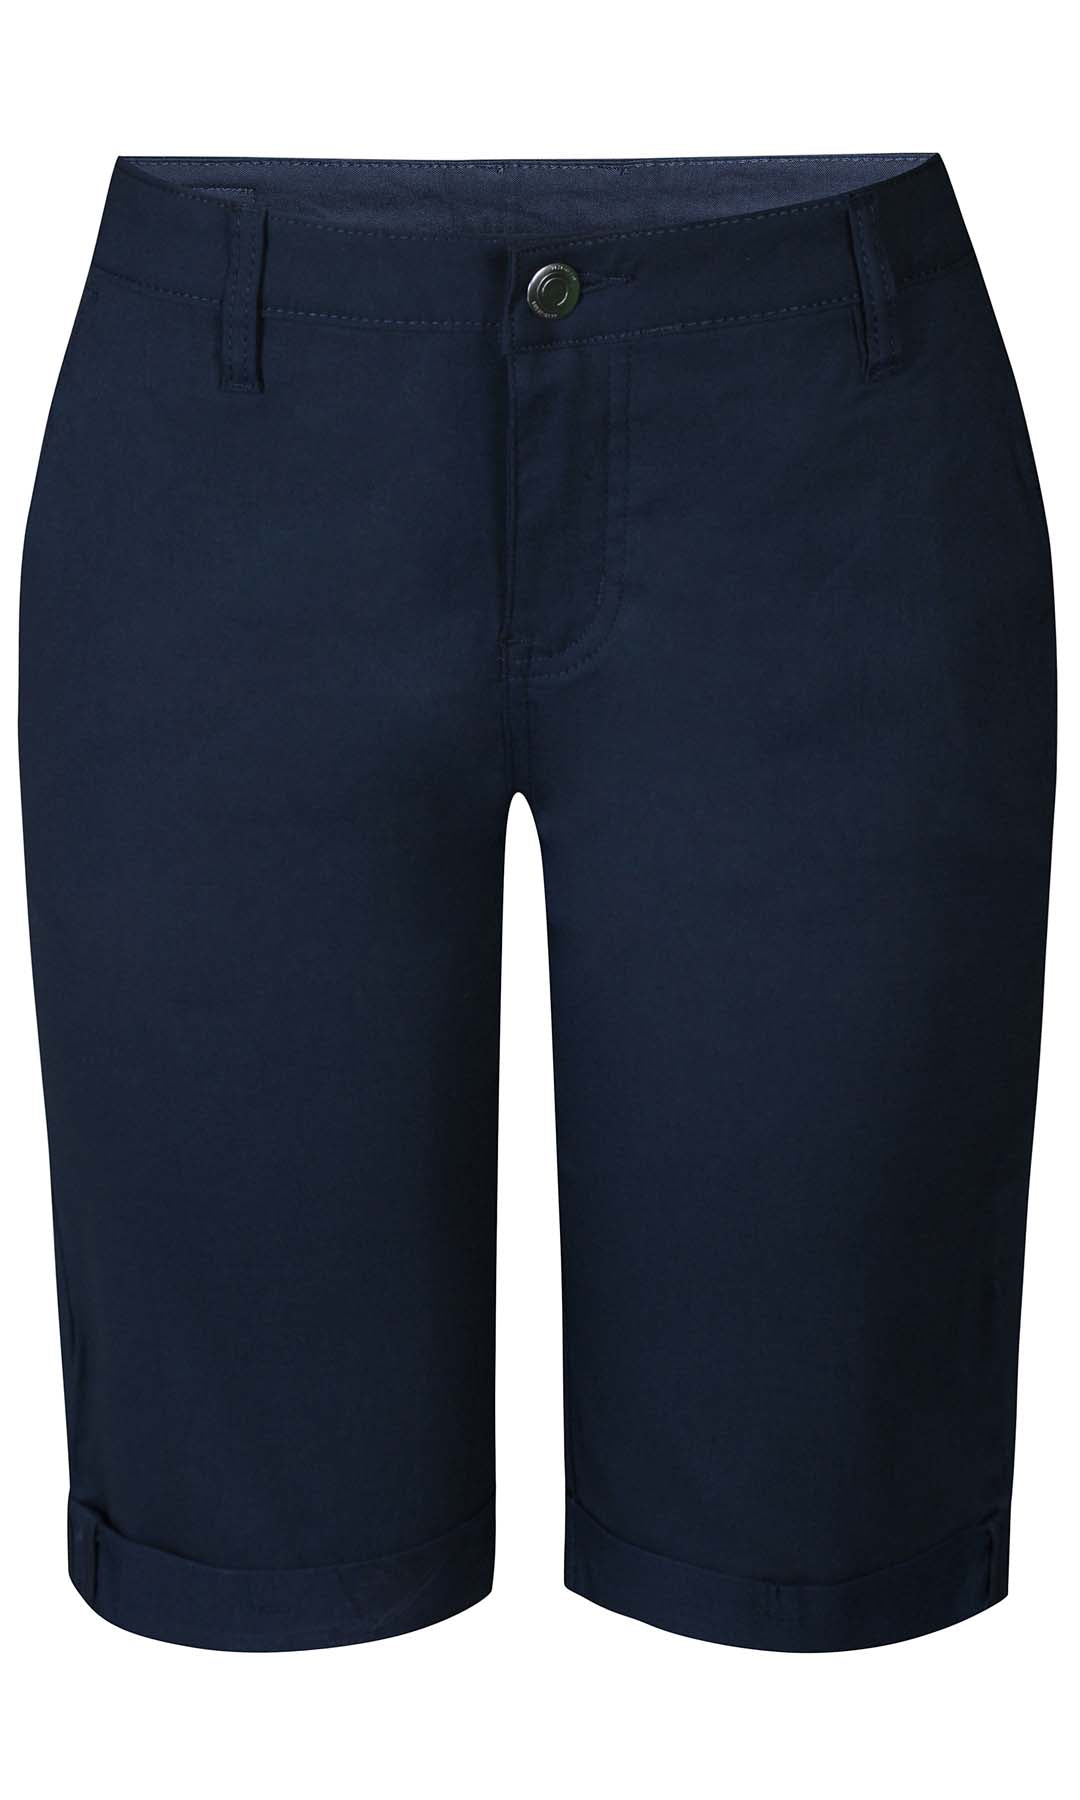  Sanne 313, Blue Bengaline Shorts - Timeless Design with Elegant Finish | ZE-ZE |